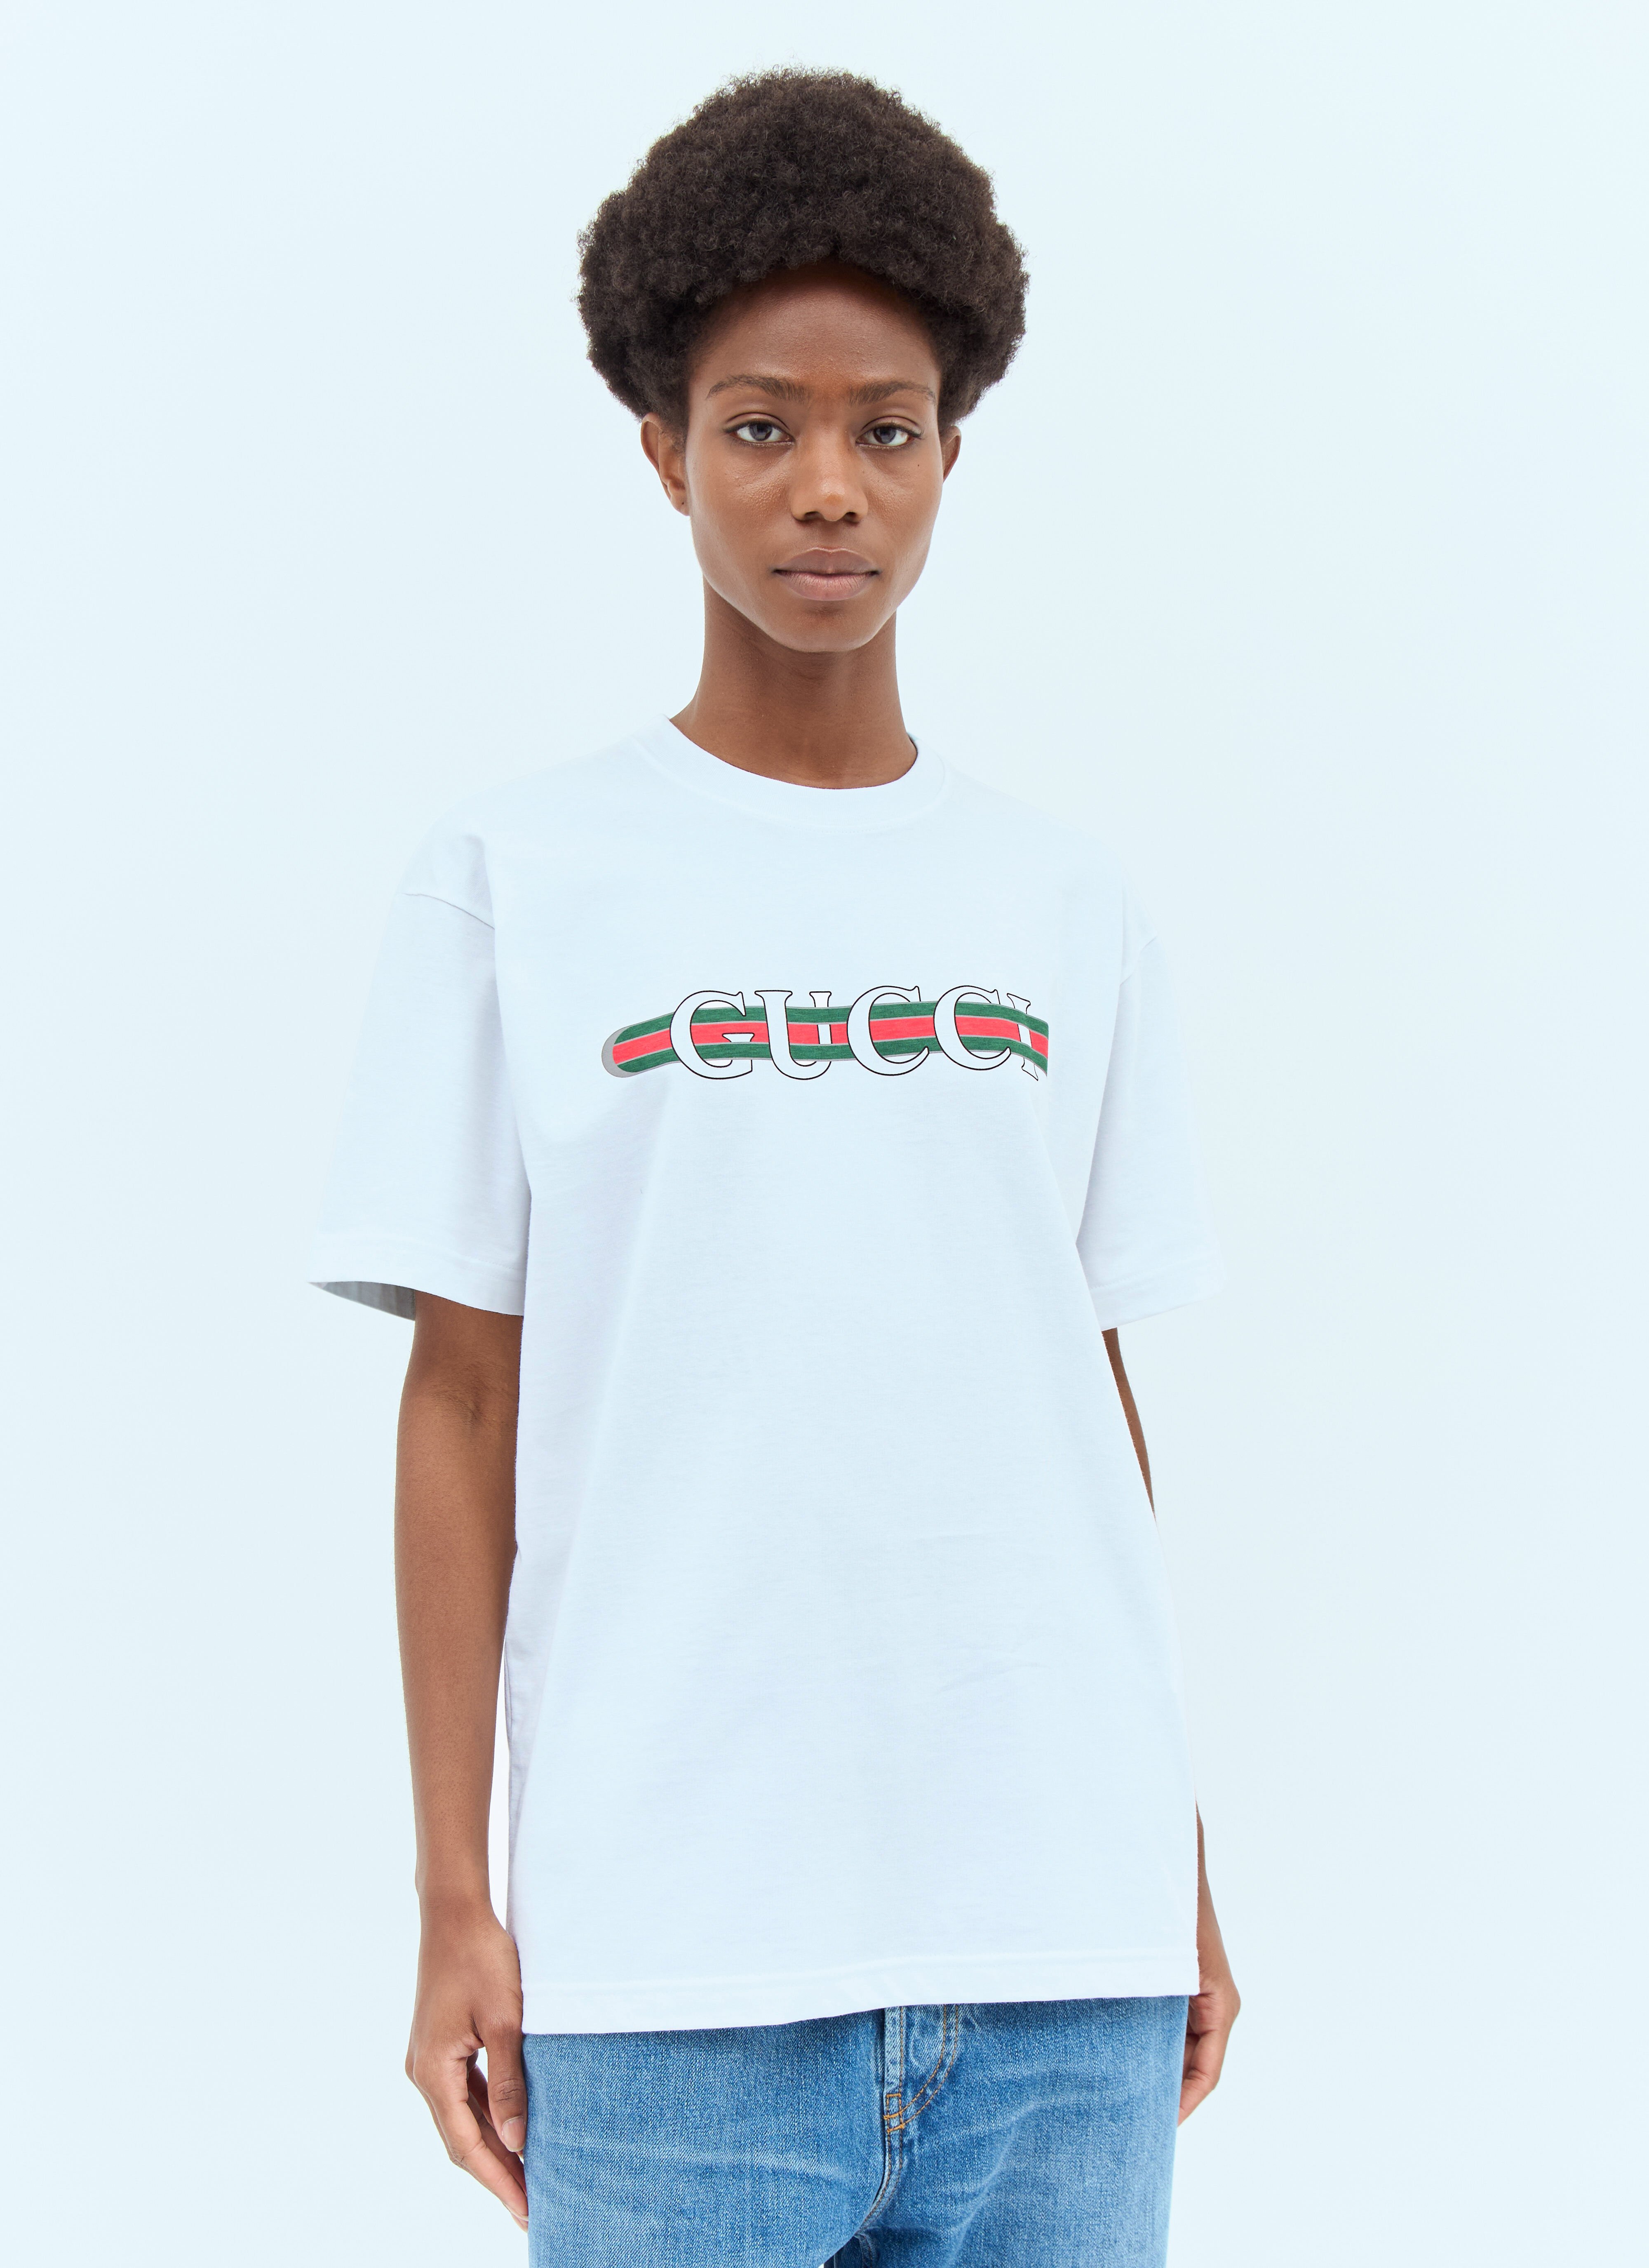 Jean Paul Gaultier Logo Print T-Shirt White jpg0258020